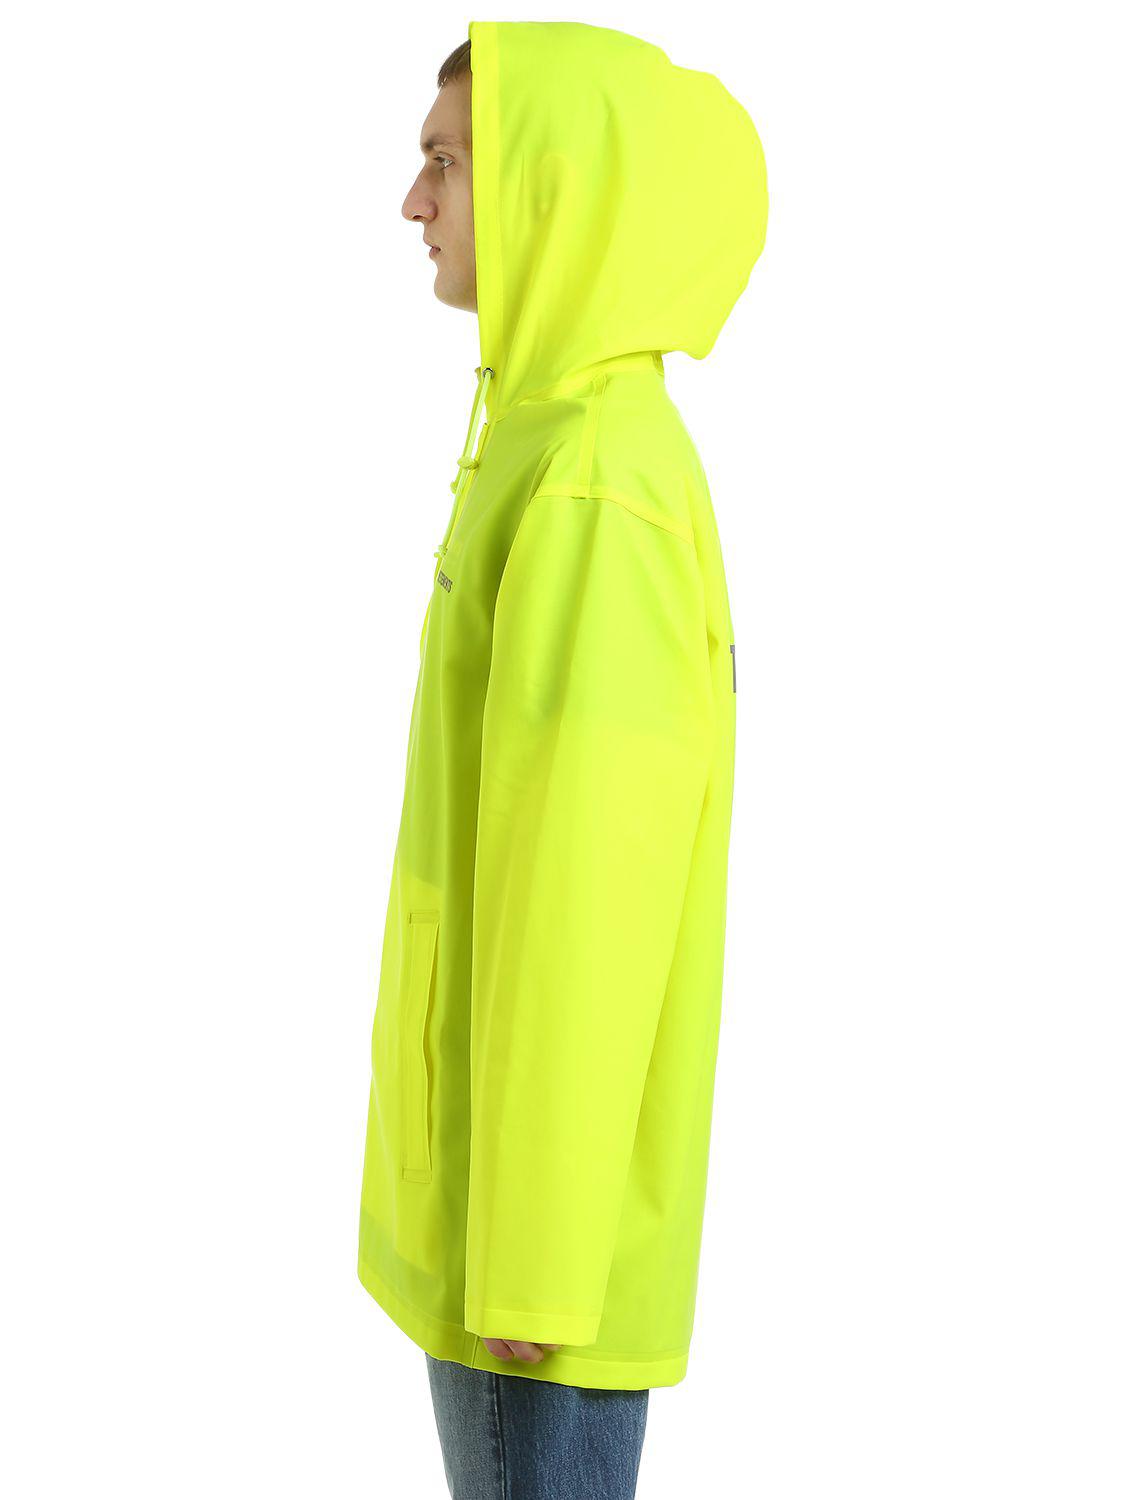 Vetements Logo Printed Rubberized Raincoat in Yellow for Men - Lyst